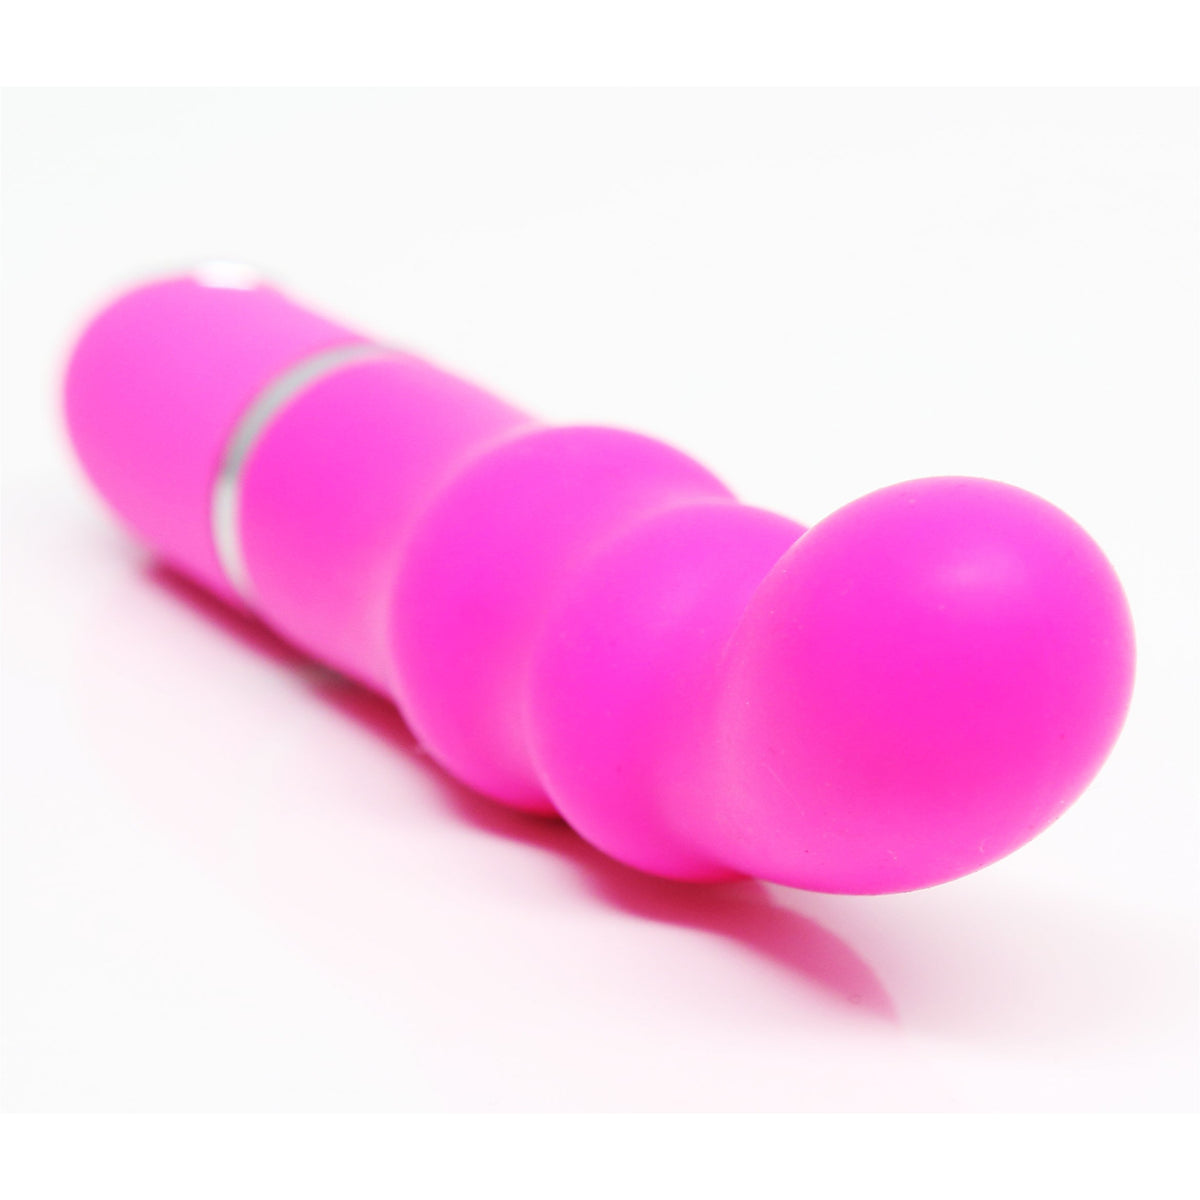 NMC Ol Vibe 4 inch G-Spot Vibrator - Pink